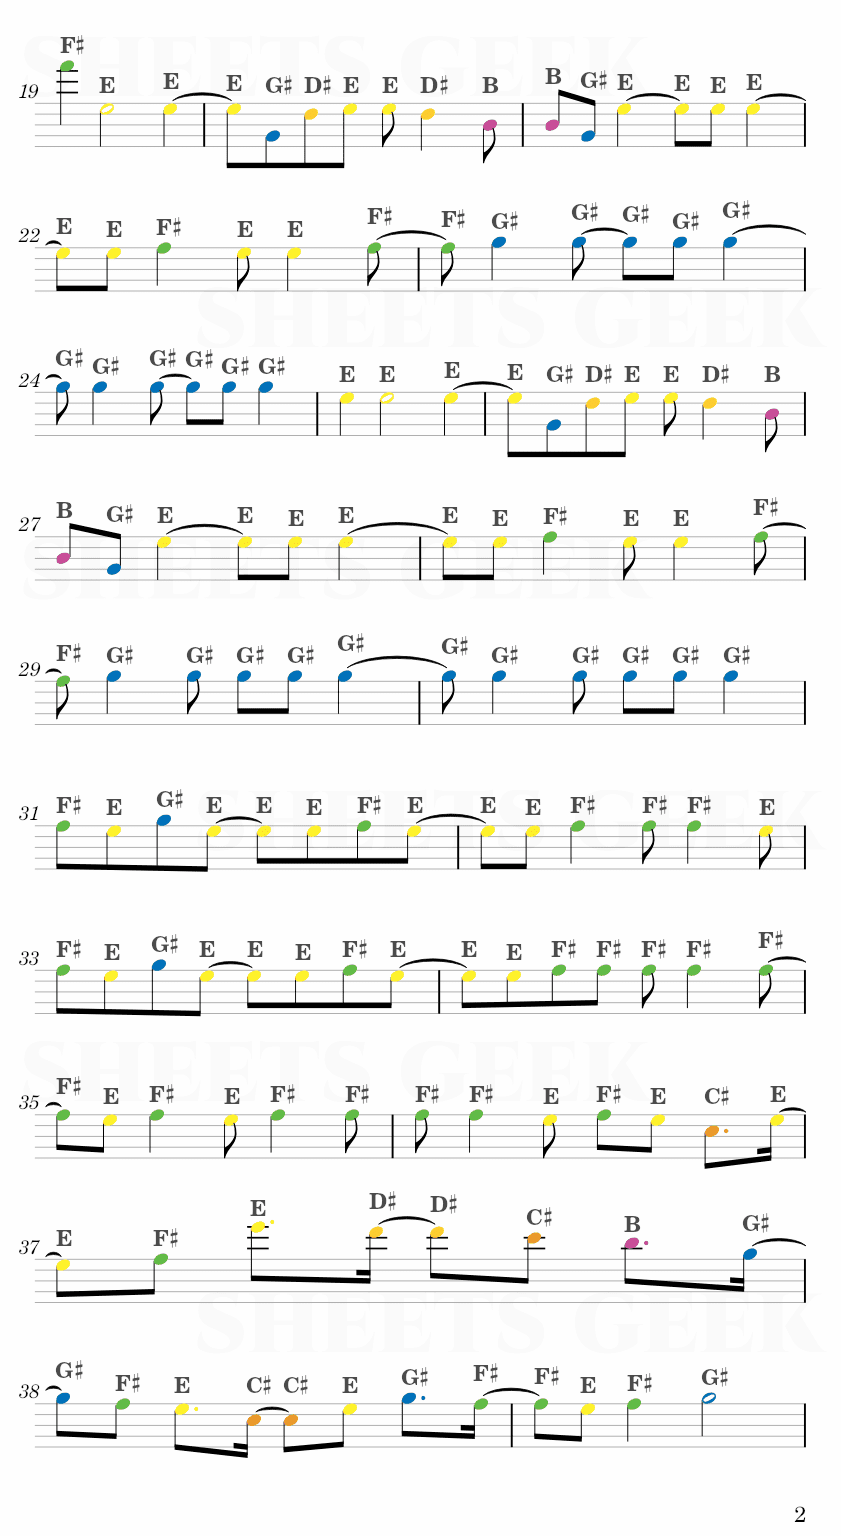 Haruka Mirai - Black Clover Opening 1 Easy Sheet Music Free for piano, keyboard, flute, violin, sax, cello page 2